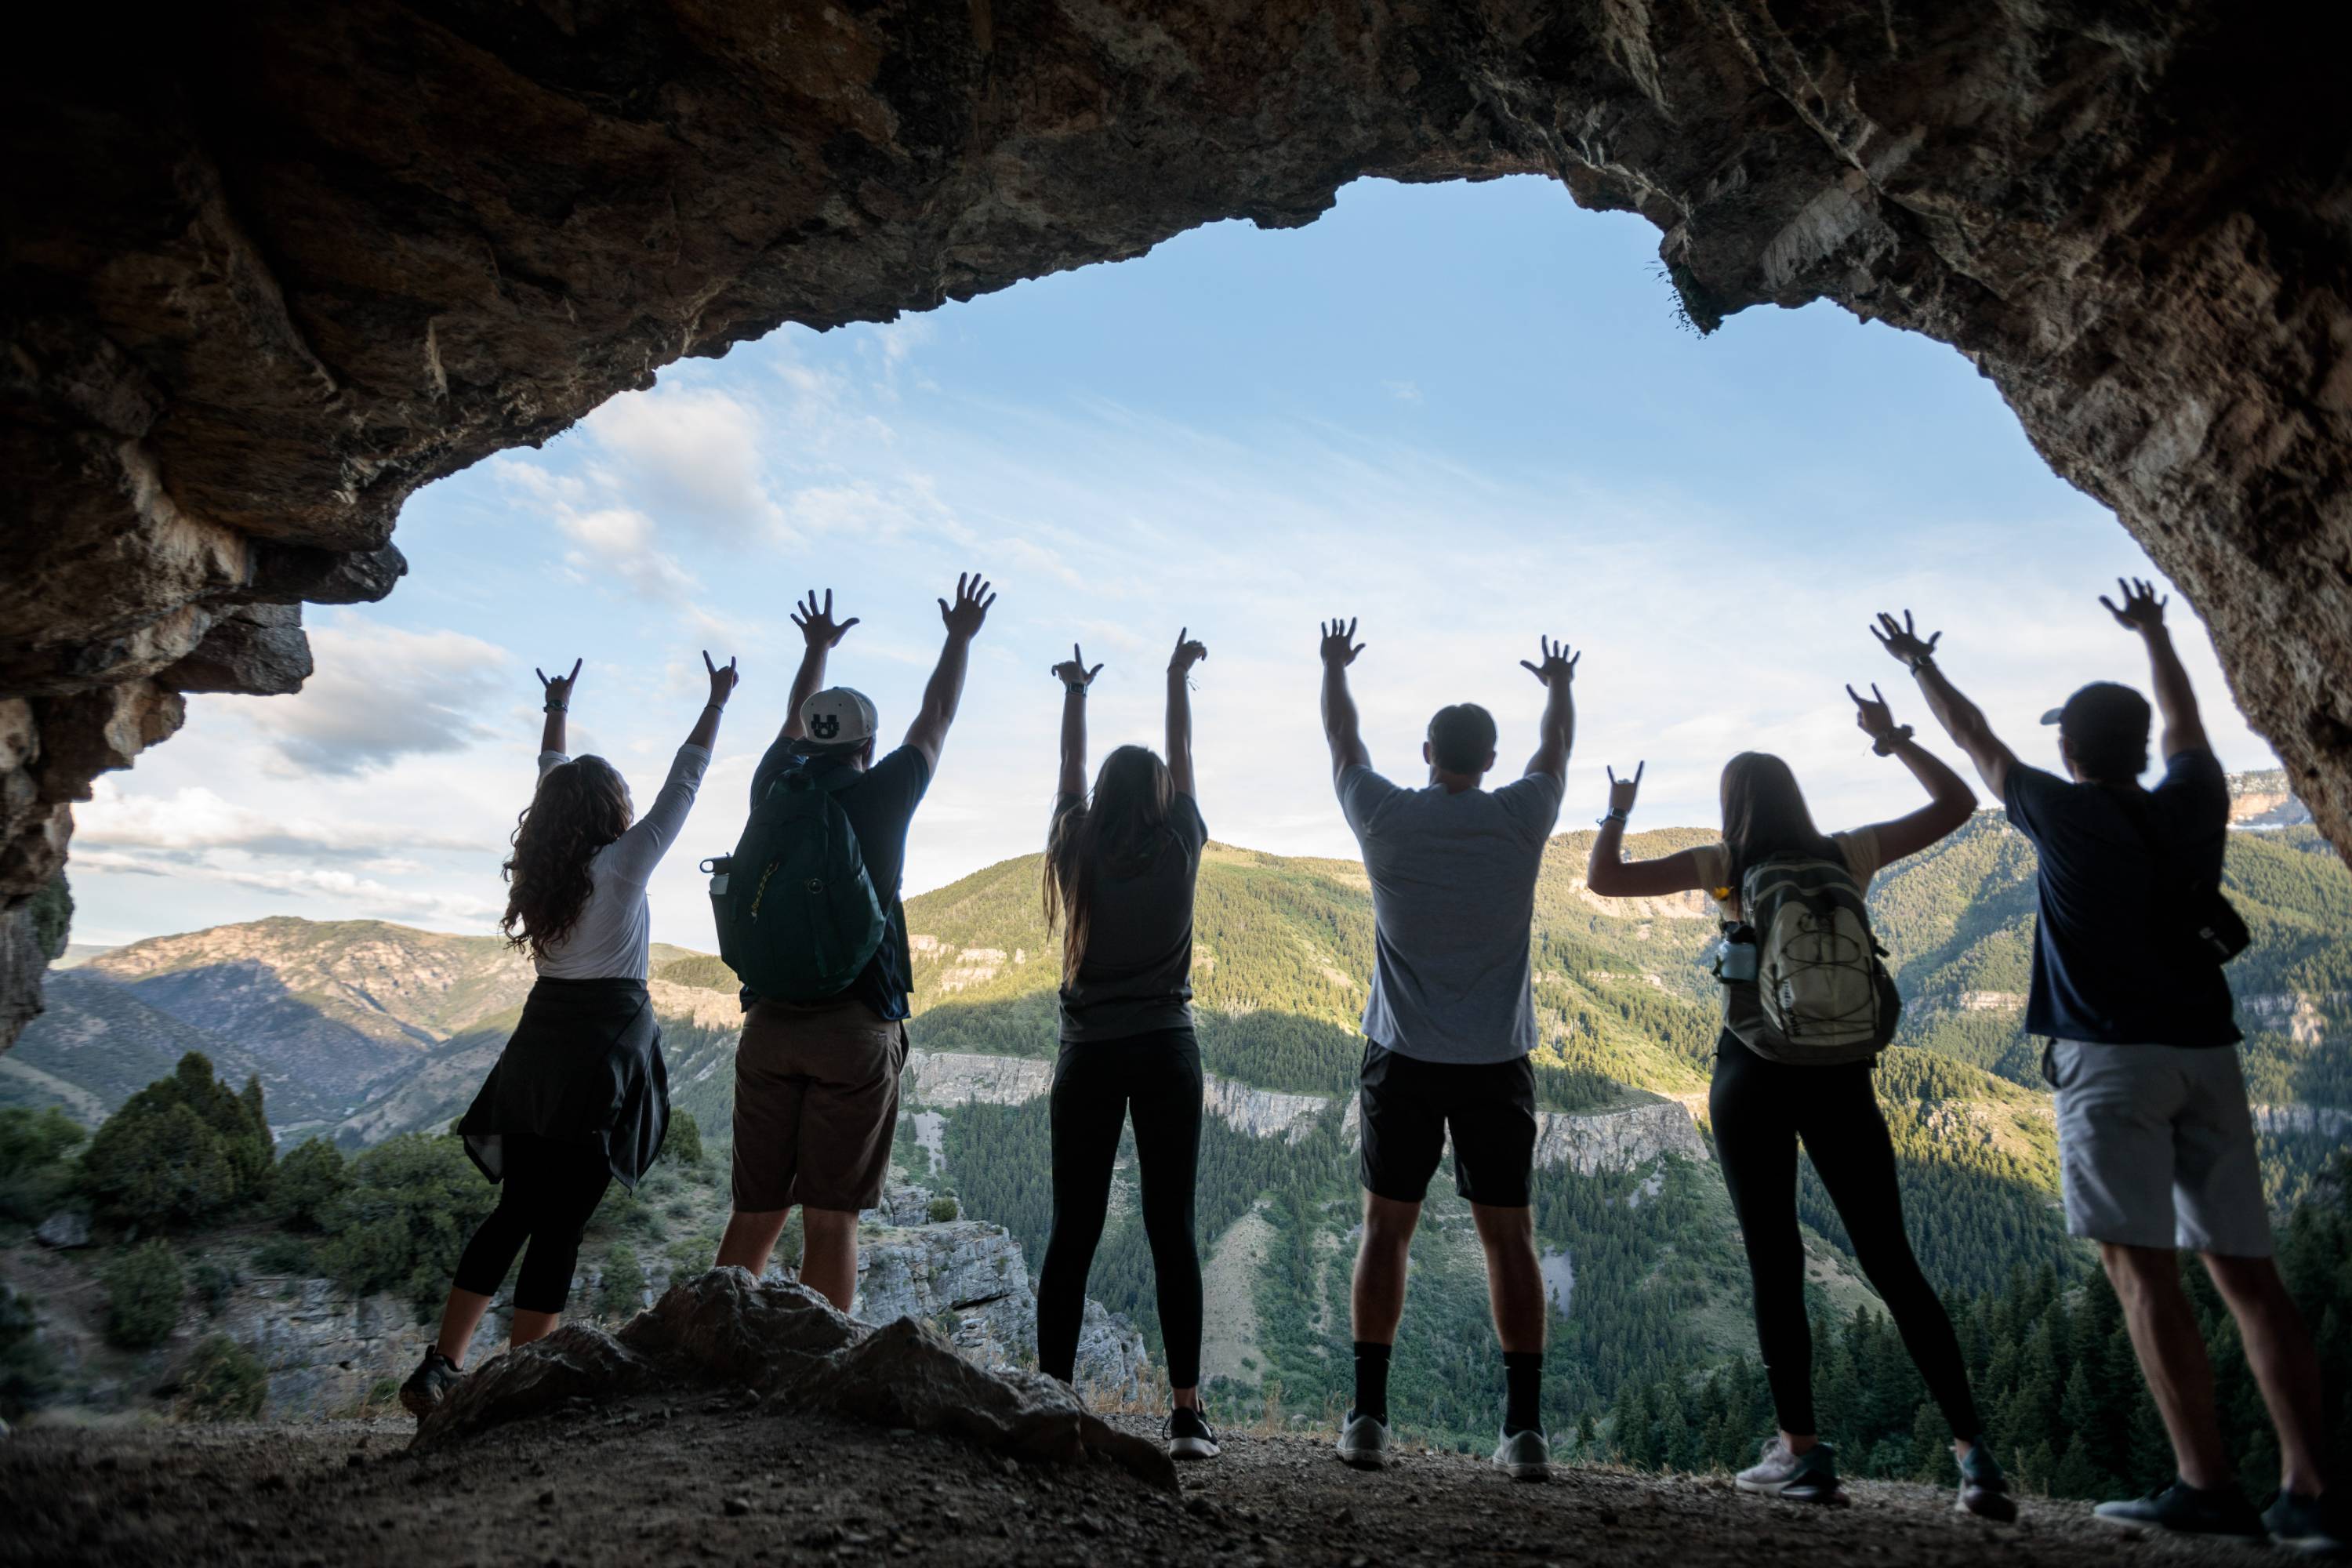 Field group at the Wind Caves, Logan, Utah